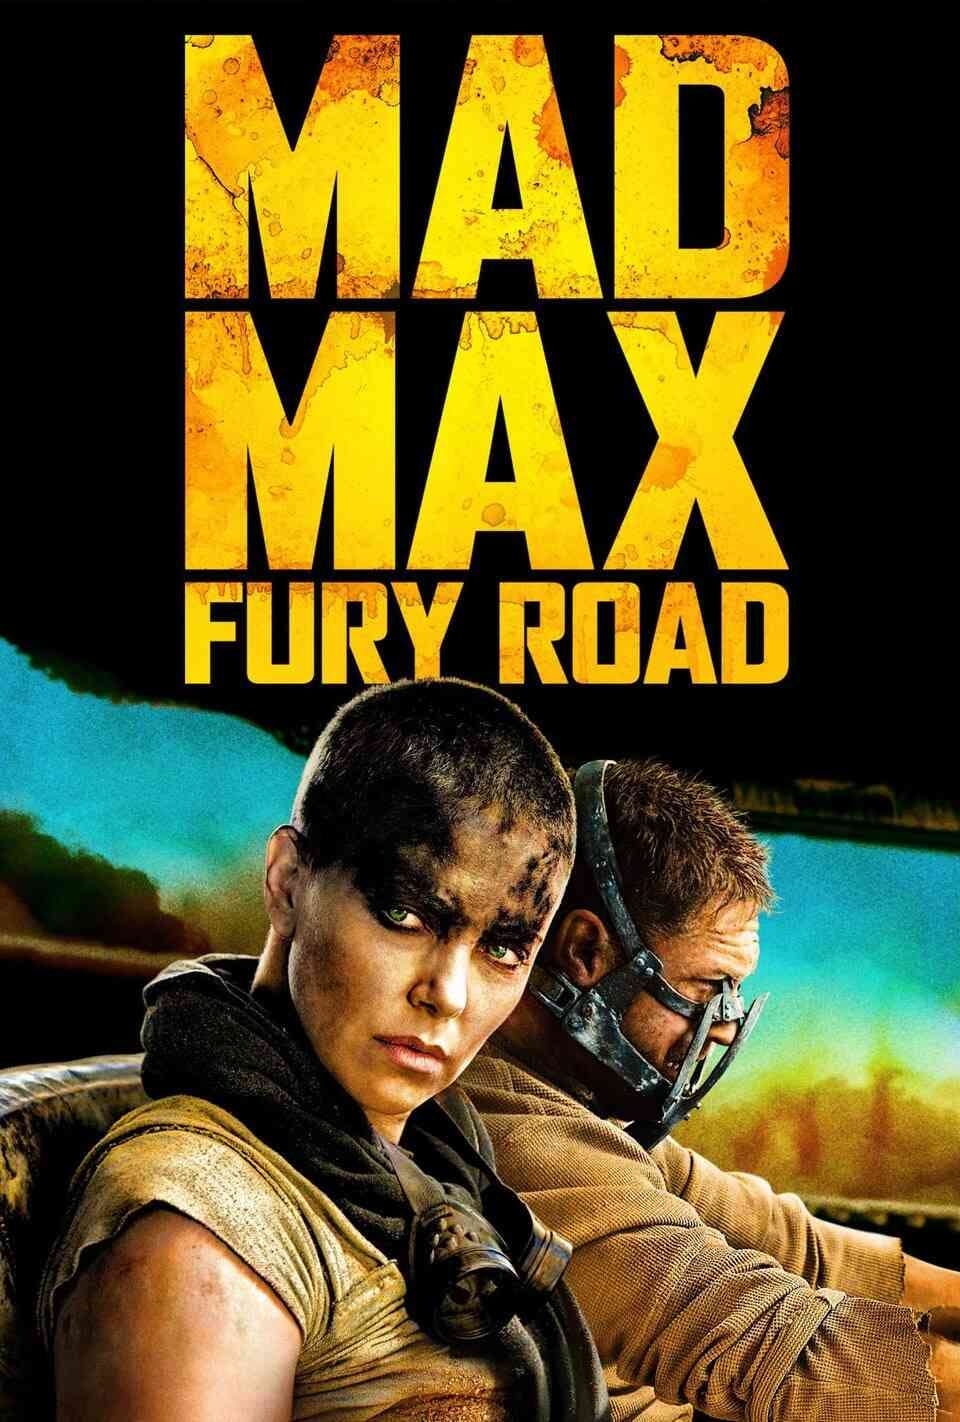 Read Fury Road screenplay.